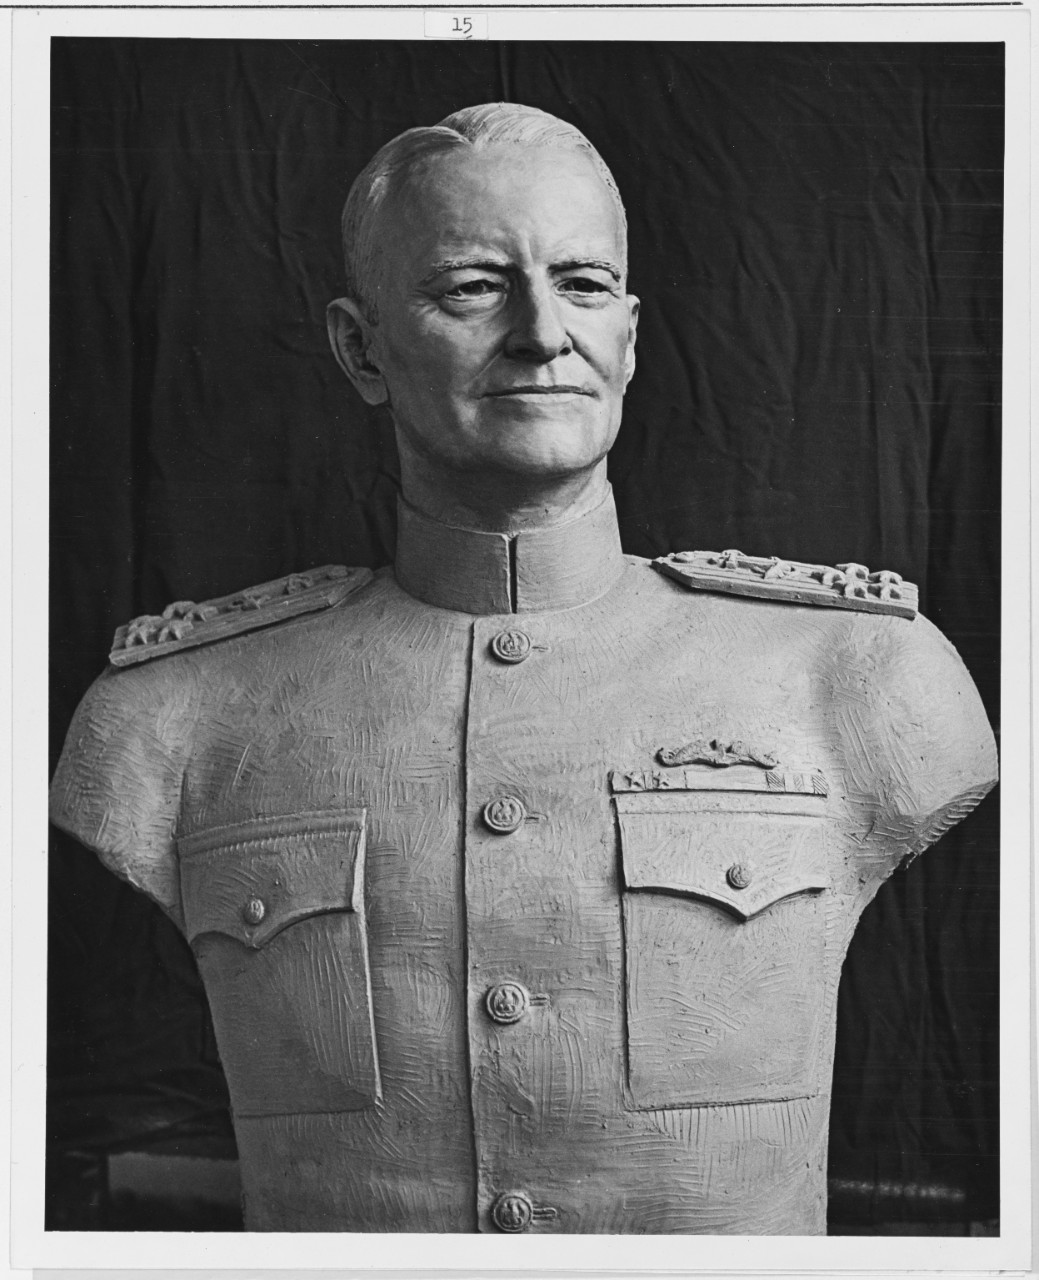 Bust of Nimitz